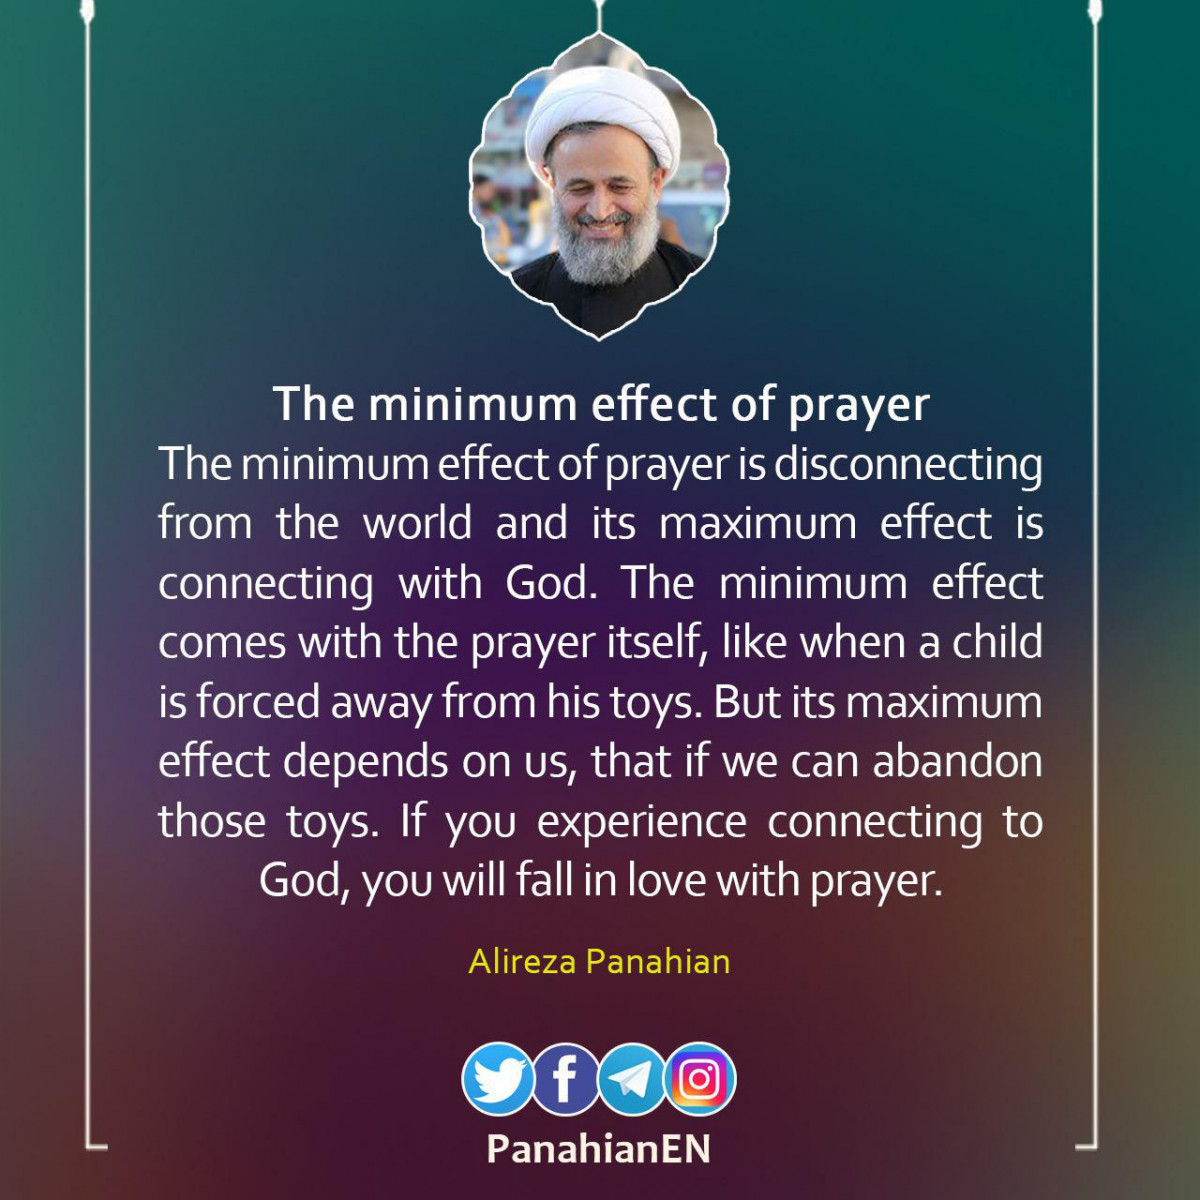 The minimum effect of prayer